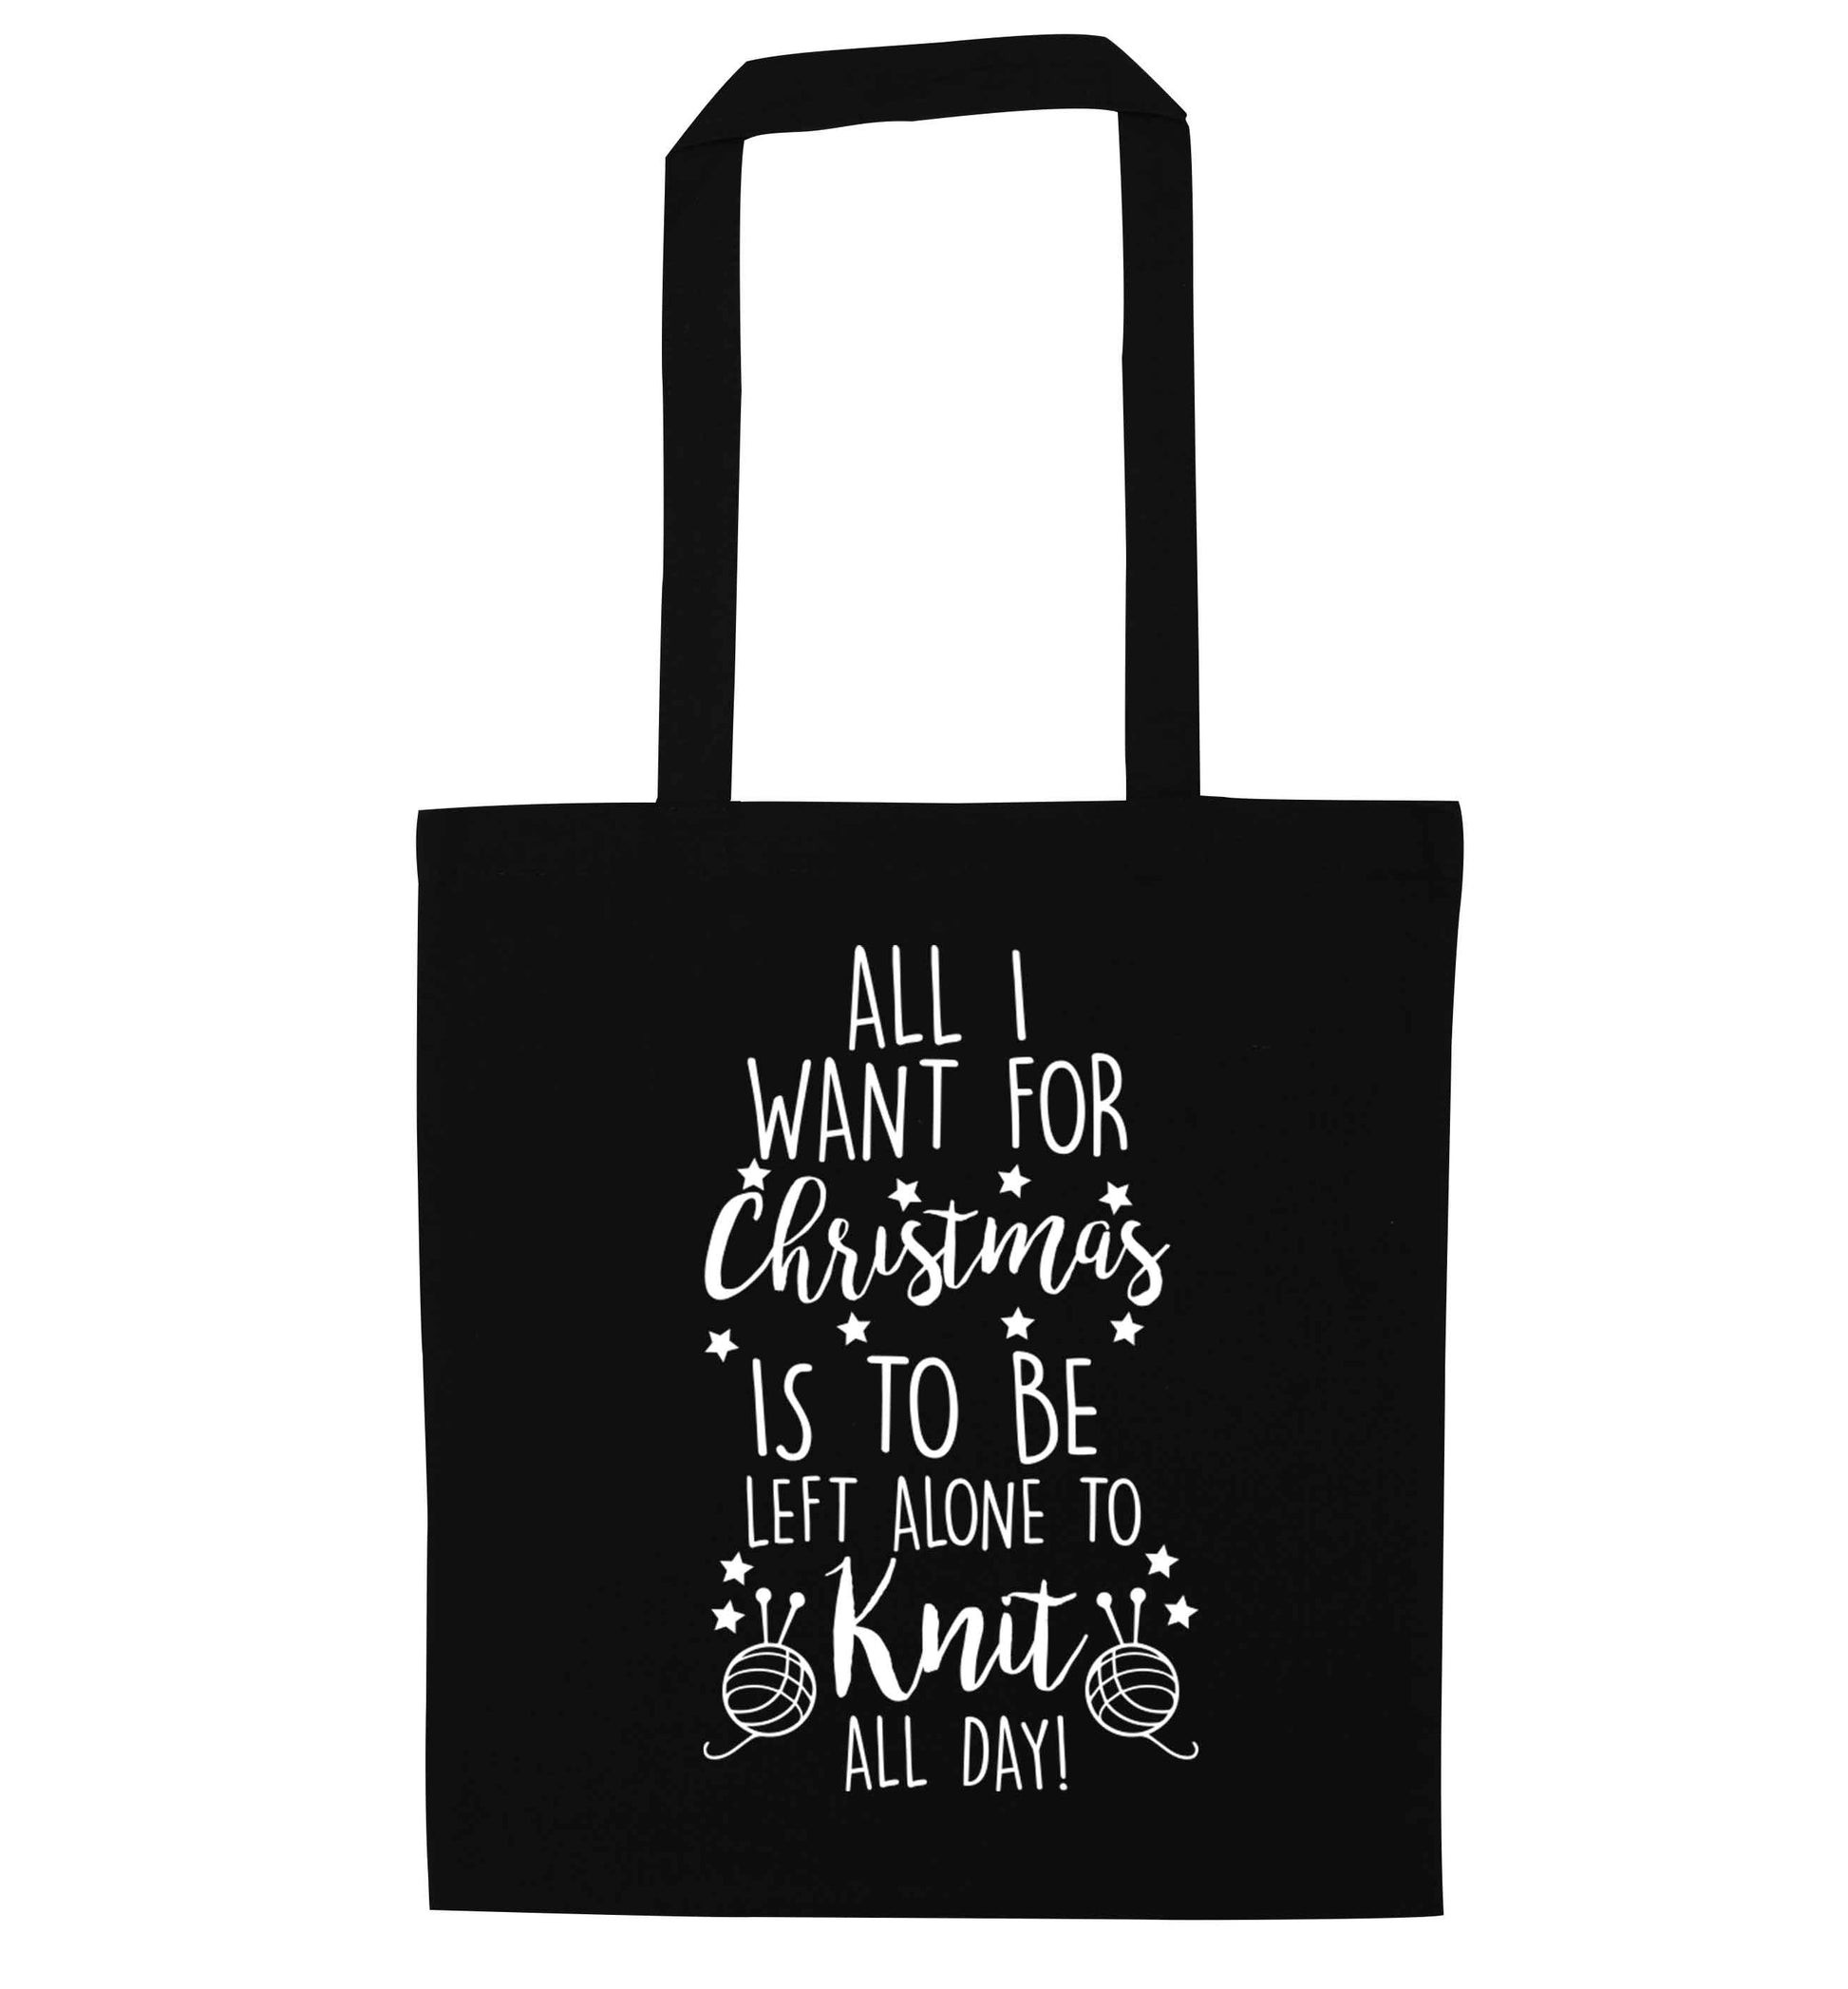 Merry Christmas black tote bag